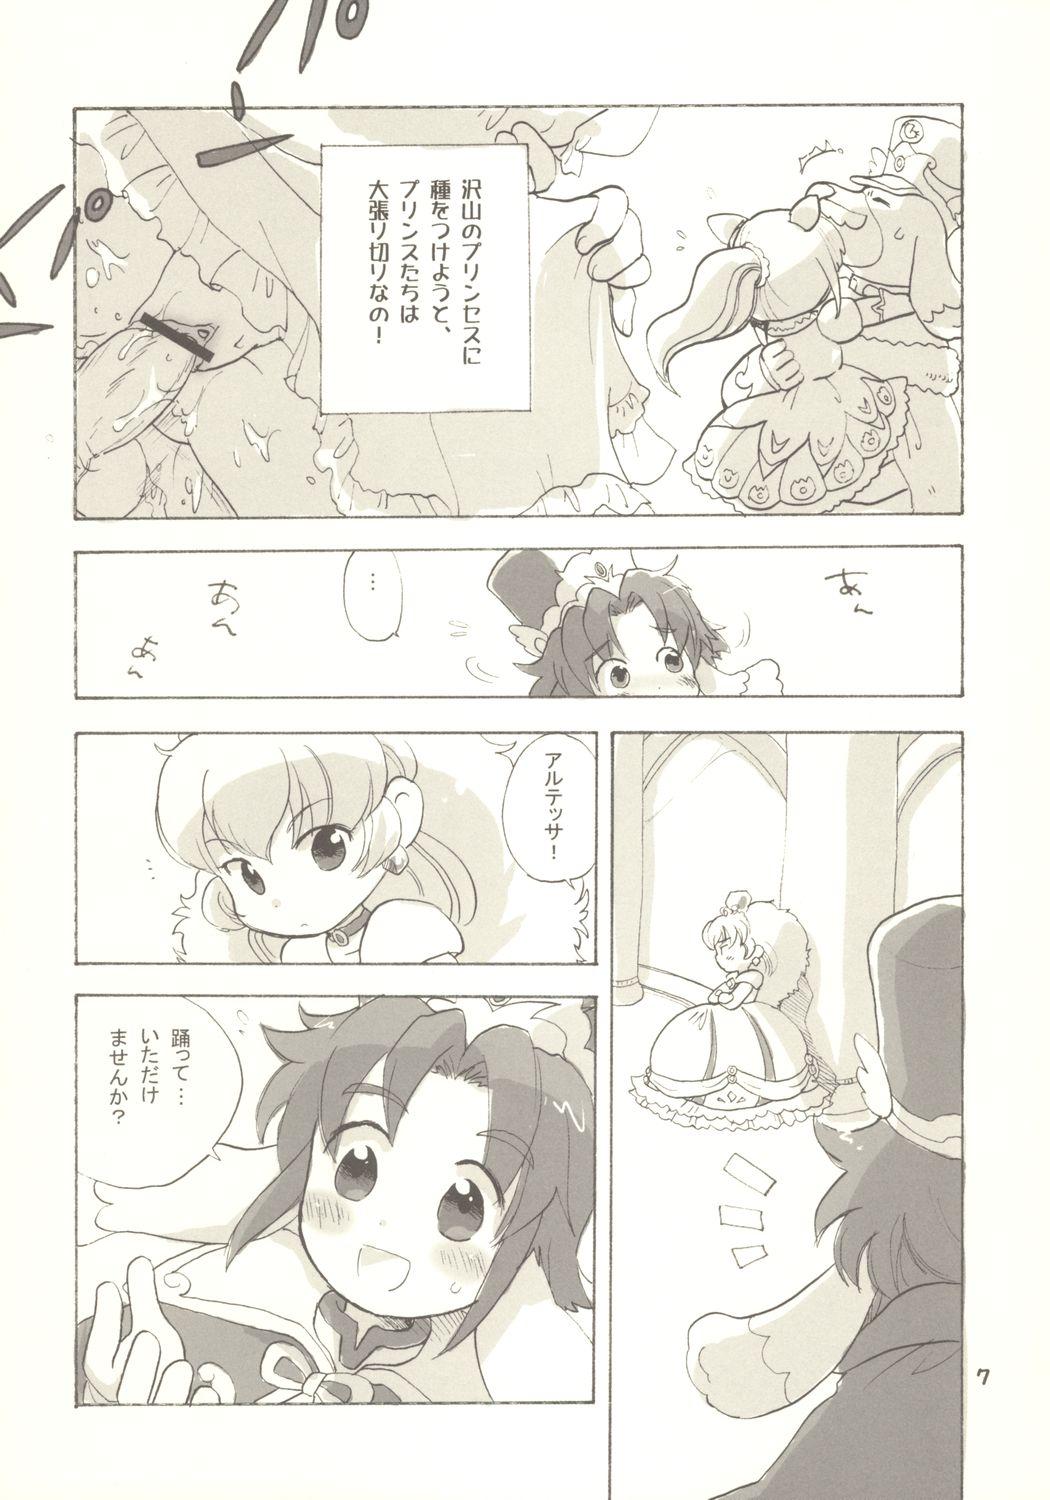 Pounded Egao ni Nare - Please give me smiling face - Fushigiboshi no futagohime Asia - Page 6